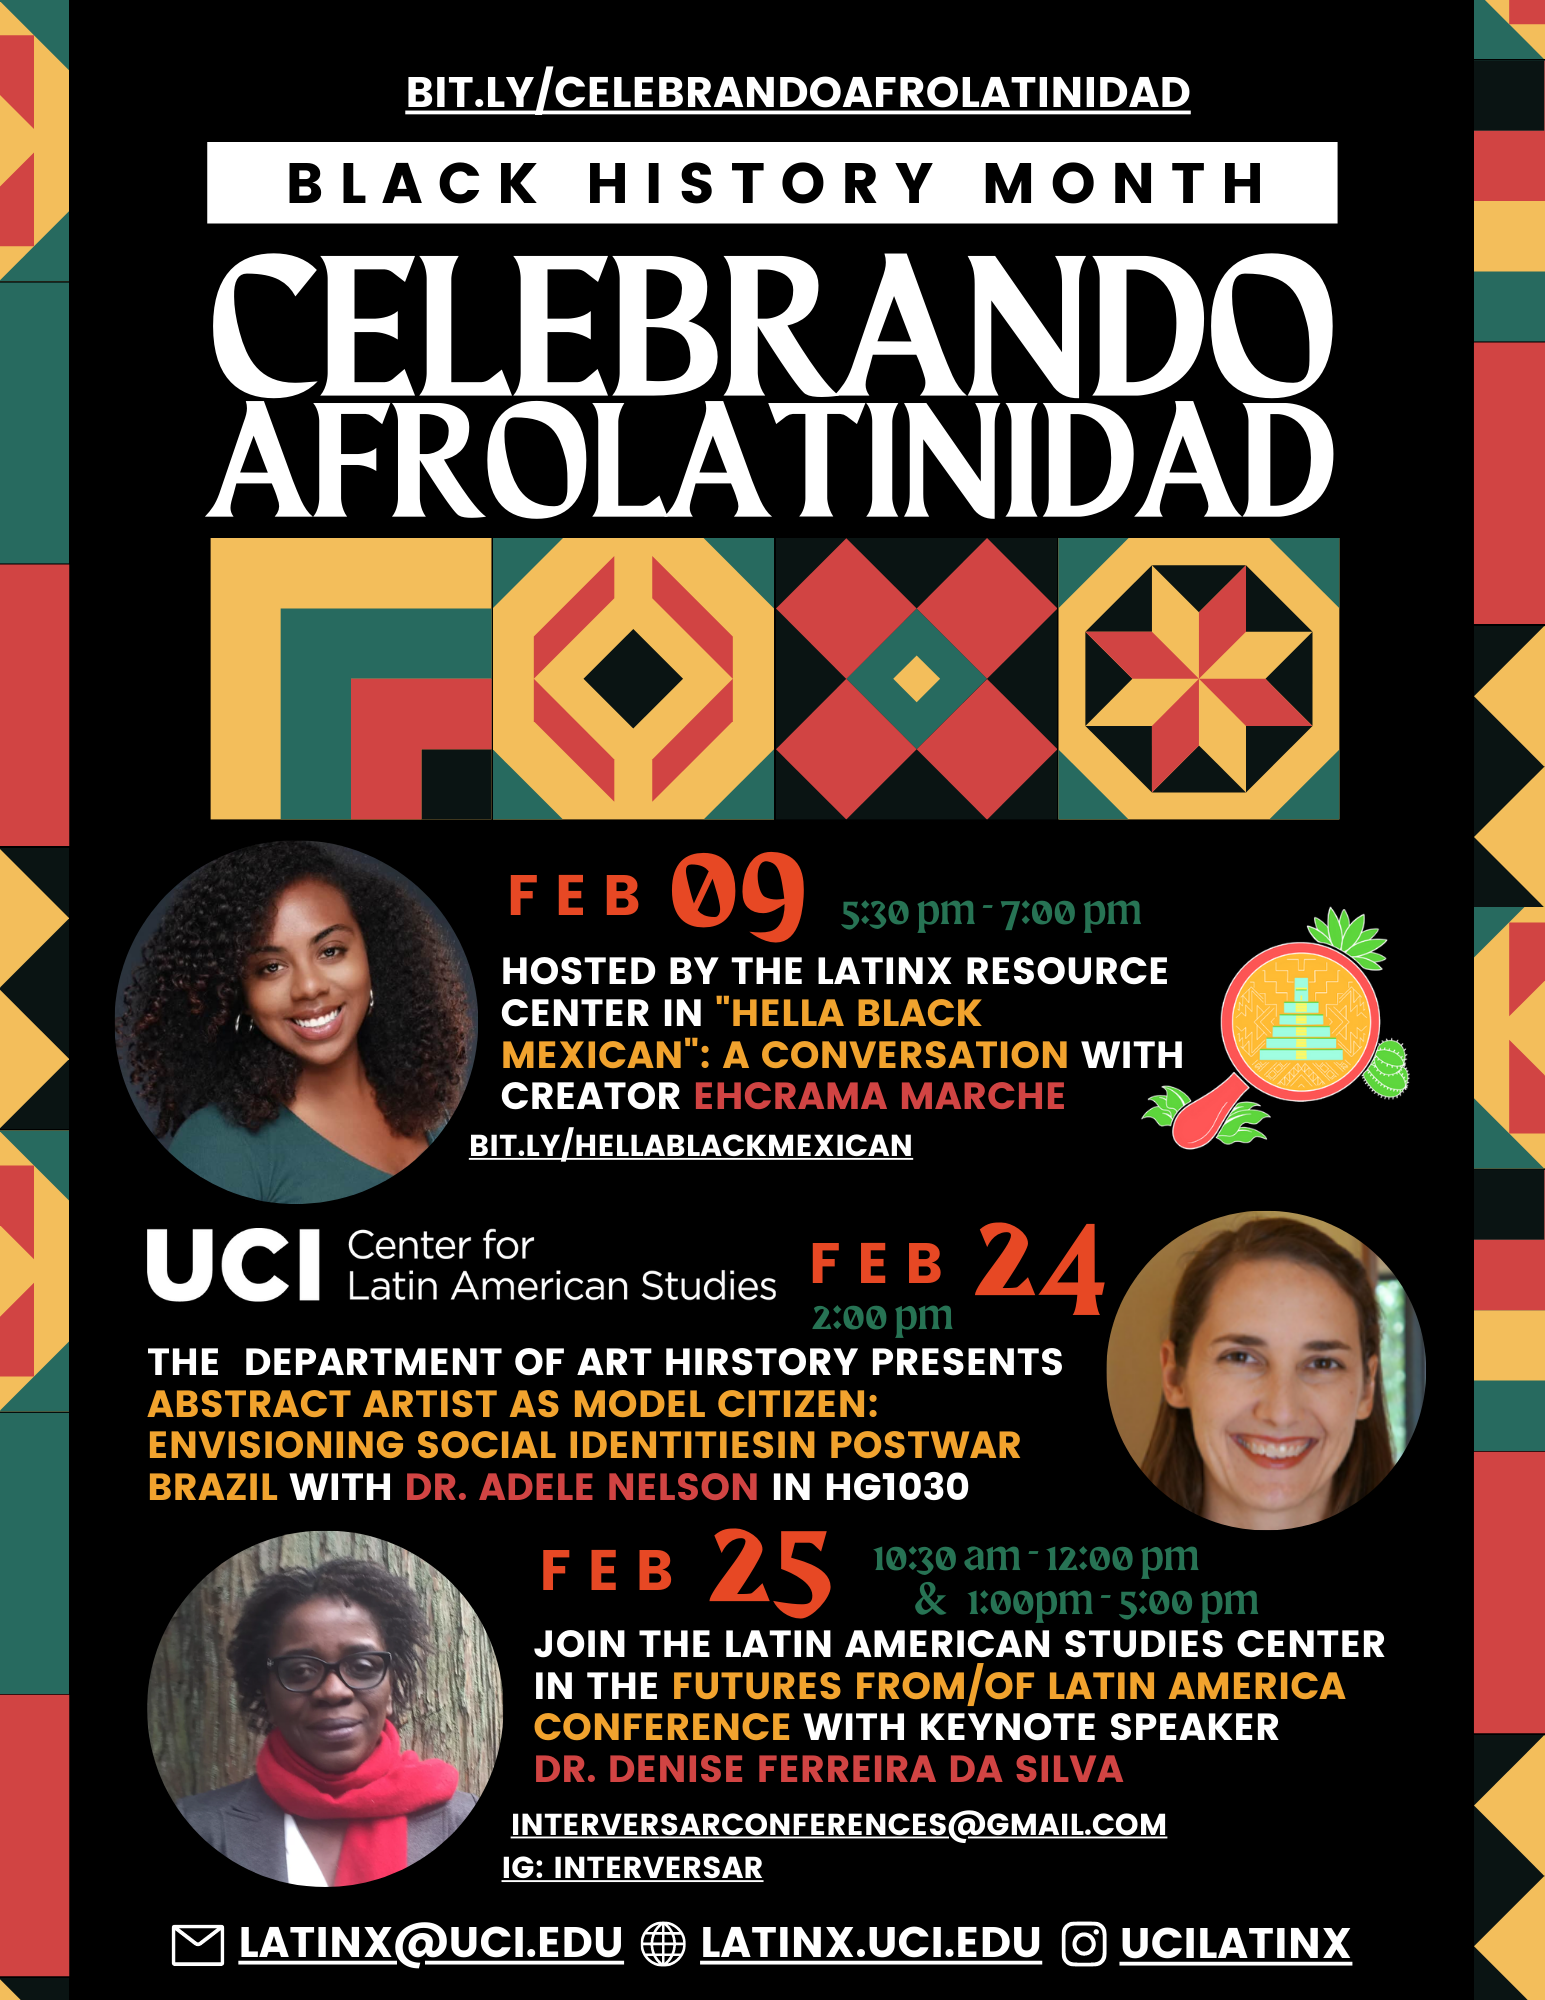 Flyer Celebrating Afrolatinidad